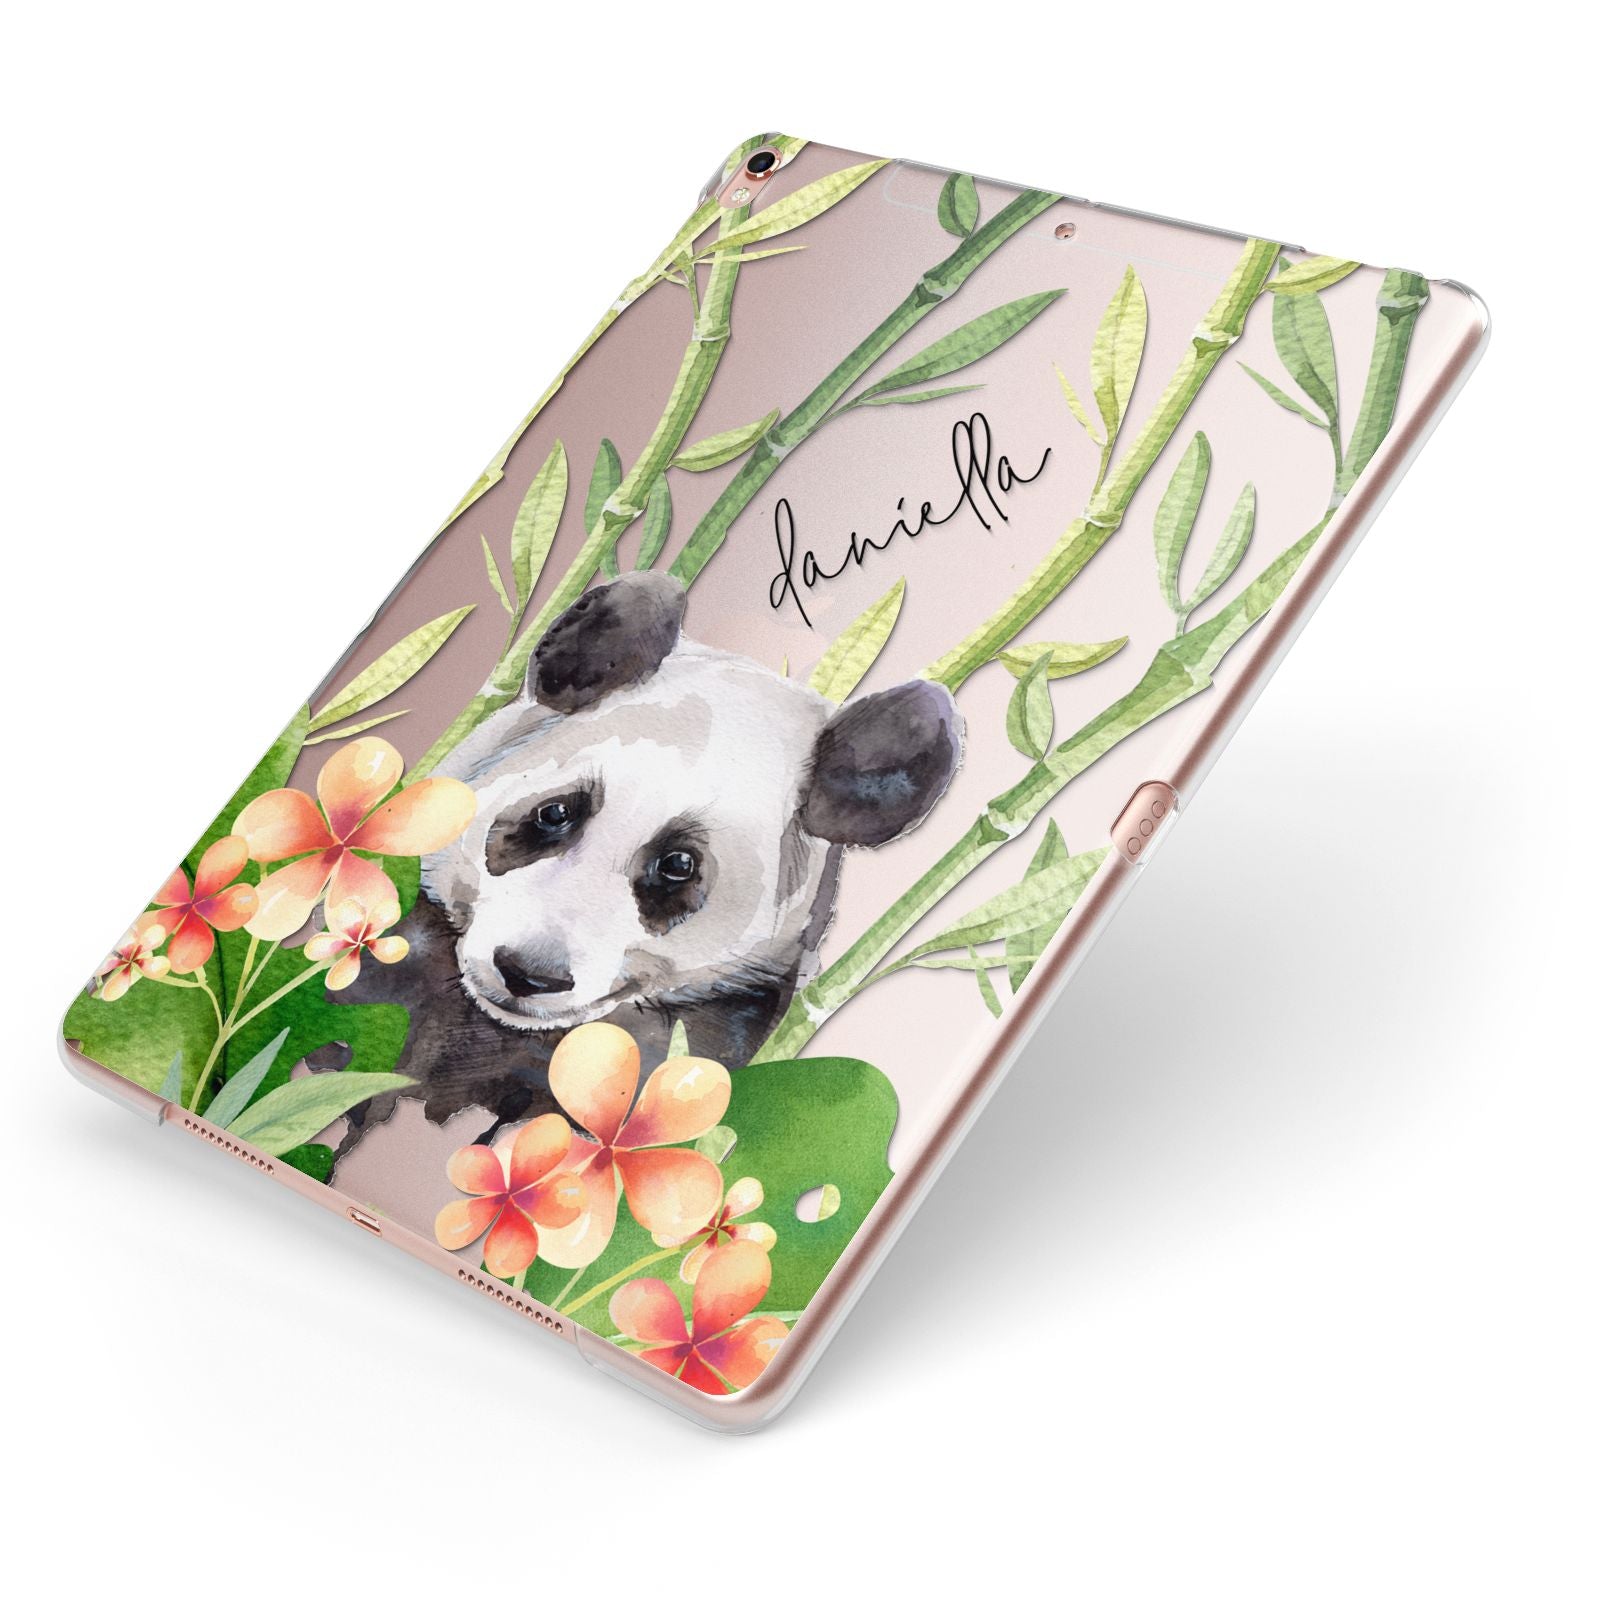 Personalised Panda Apple iPad Case on Rose Gold iPad Side View